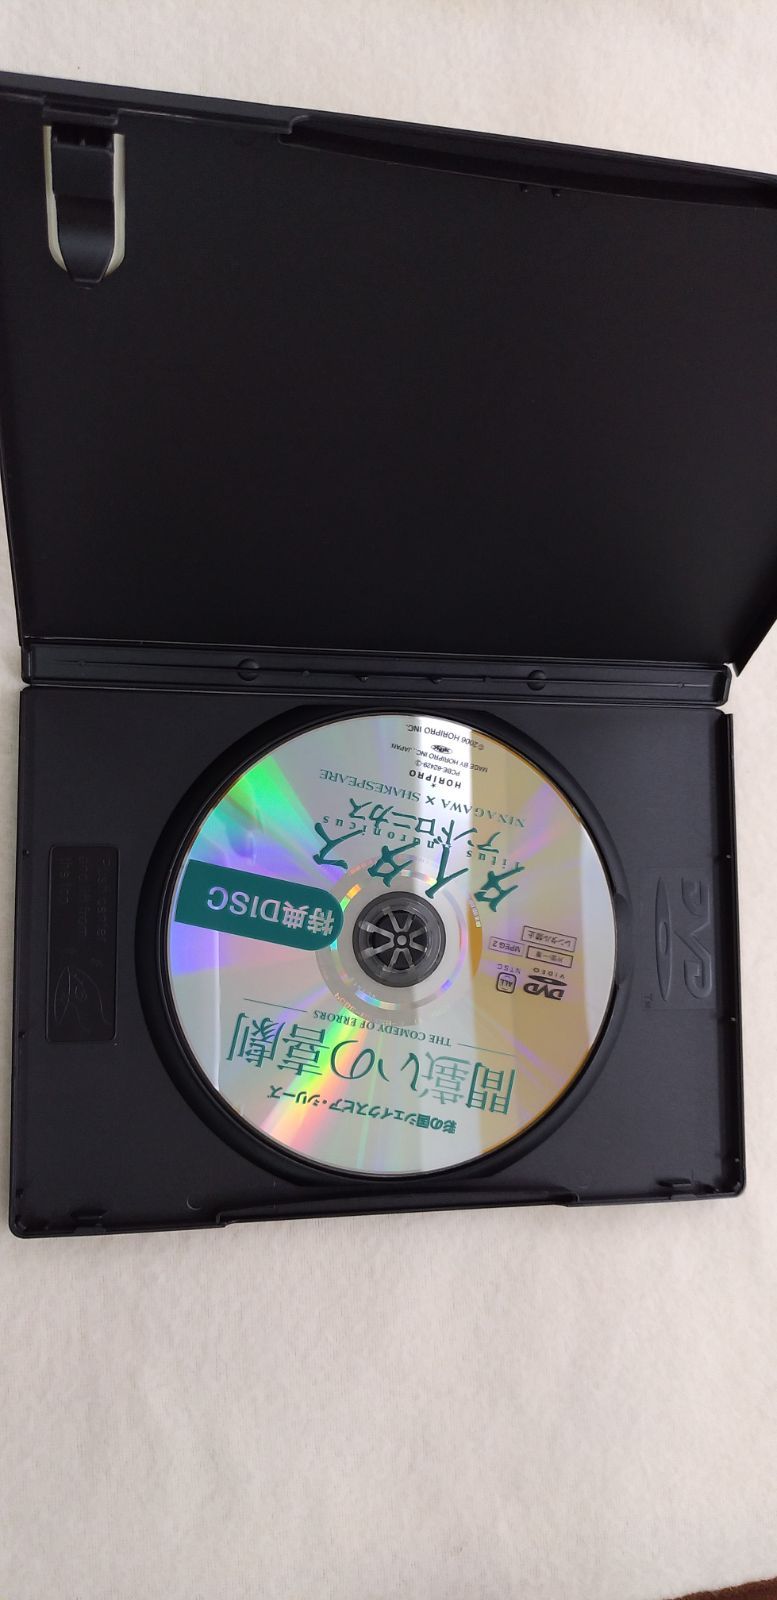 〇NINAGAWA×SHAKESPEARE III　DVD